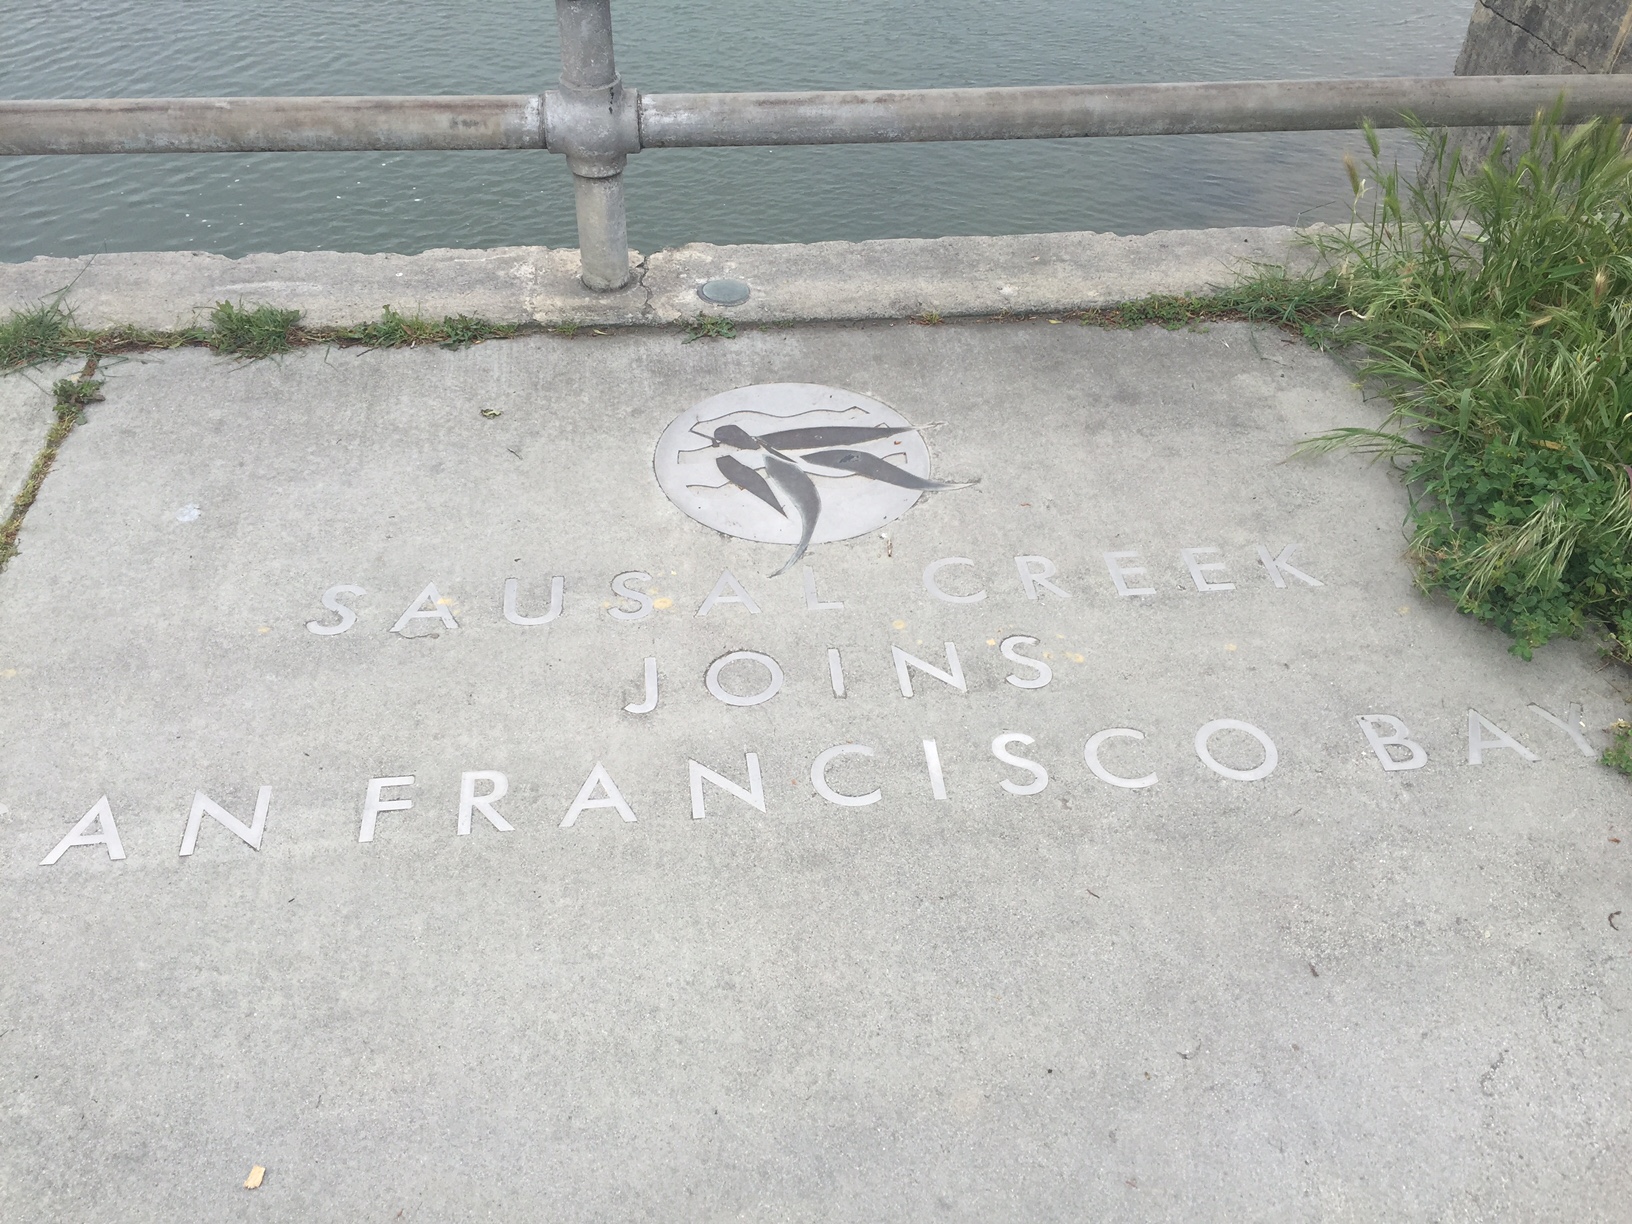 sausal creek joins SF bay